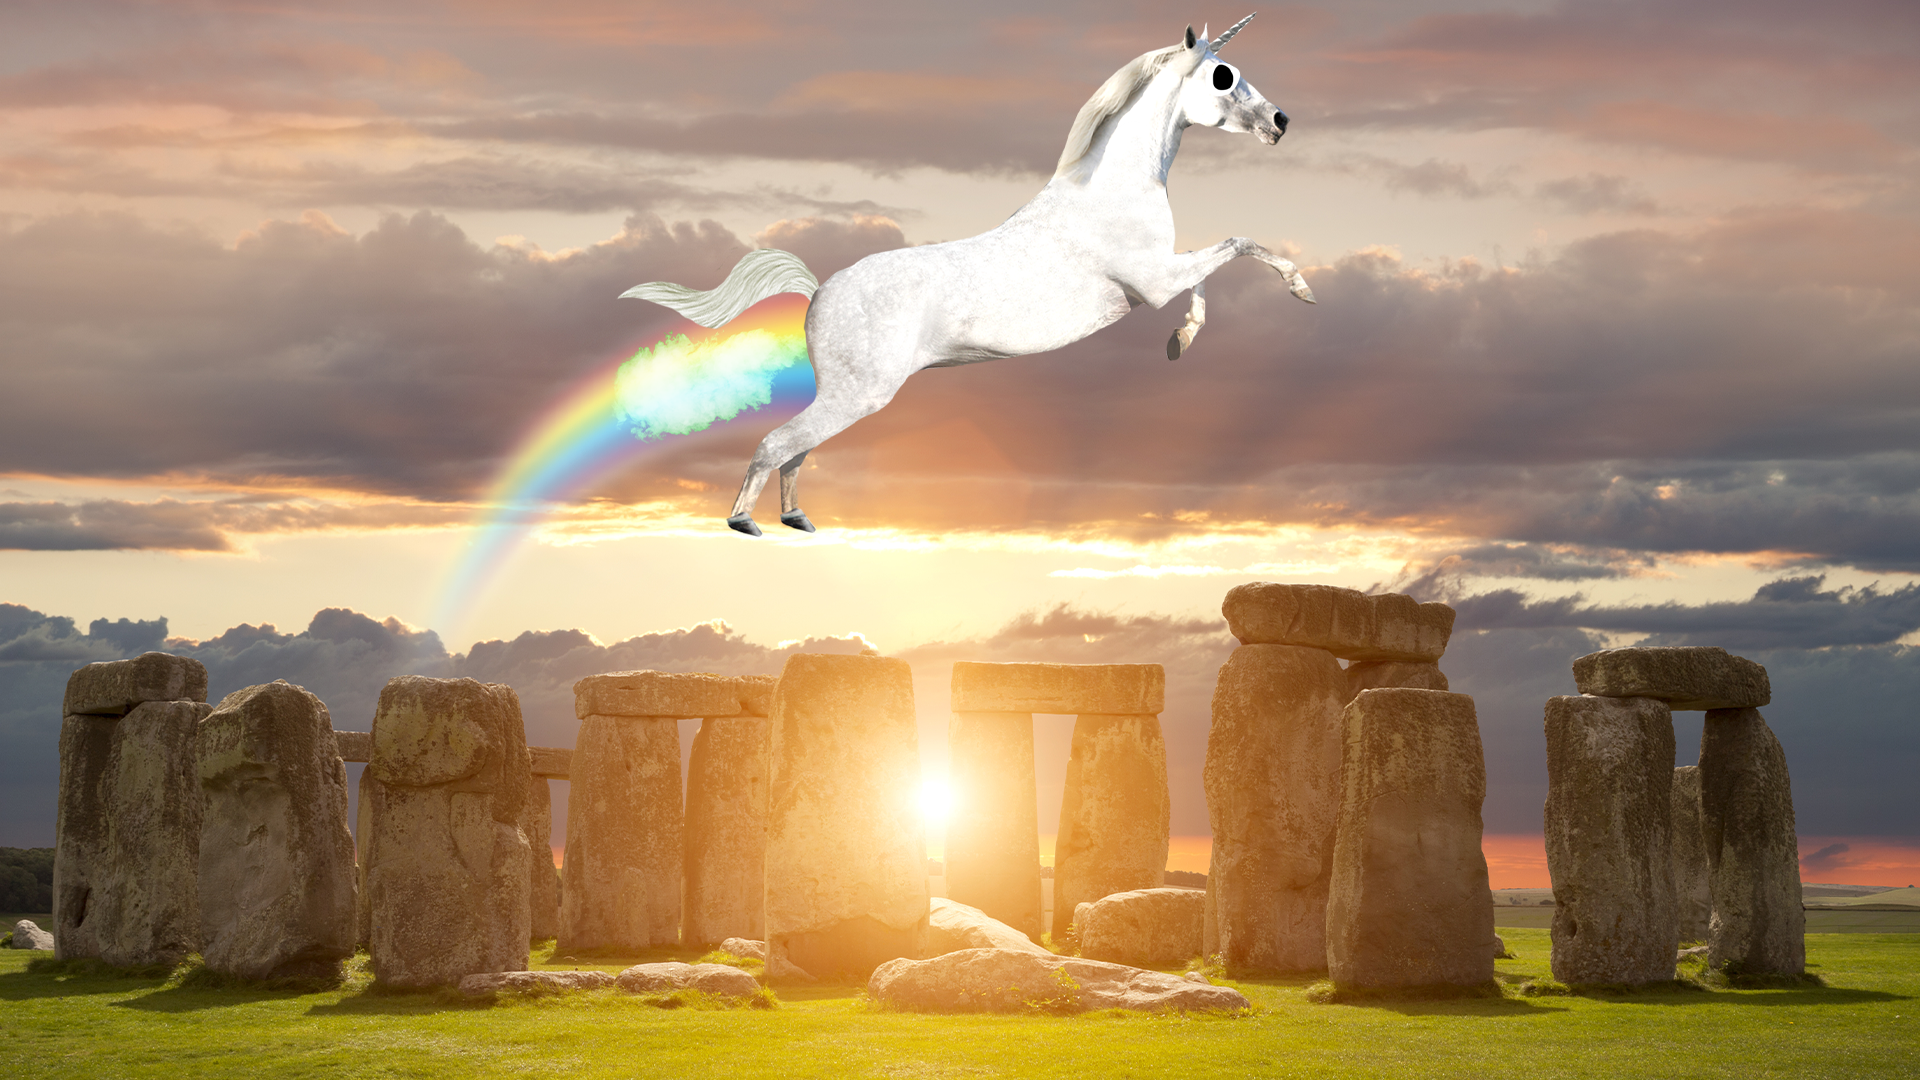 Farting unicorn flying over stonehenge